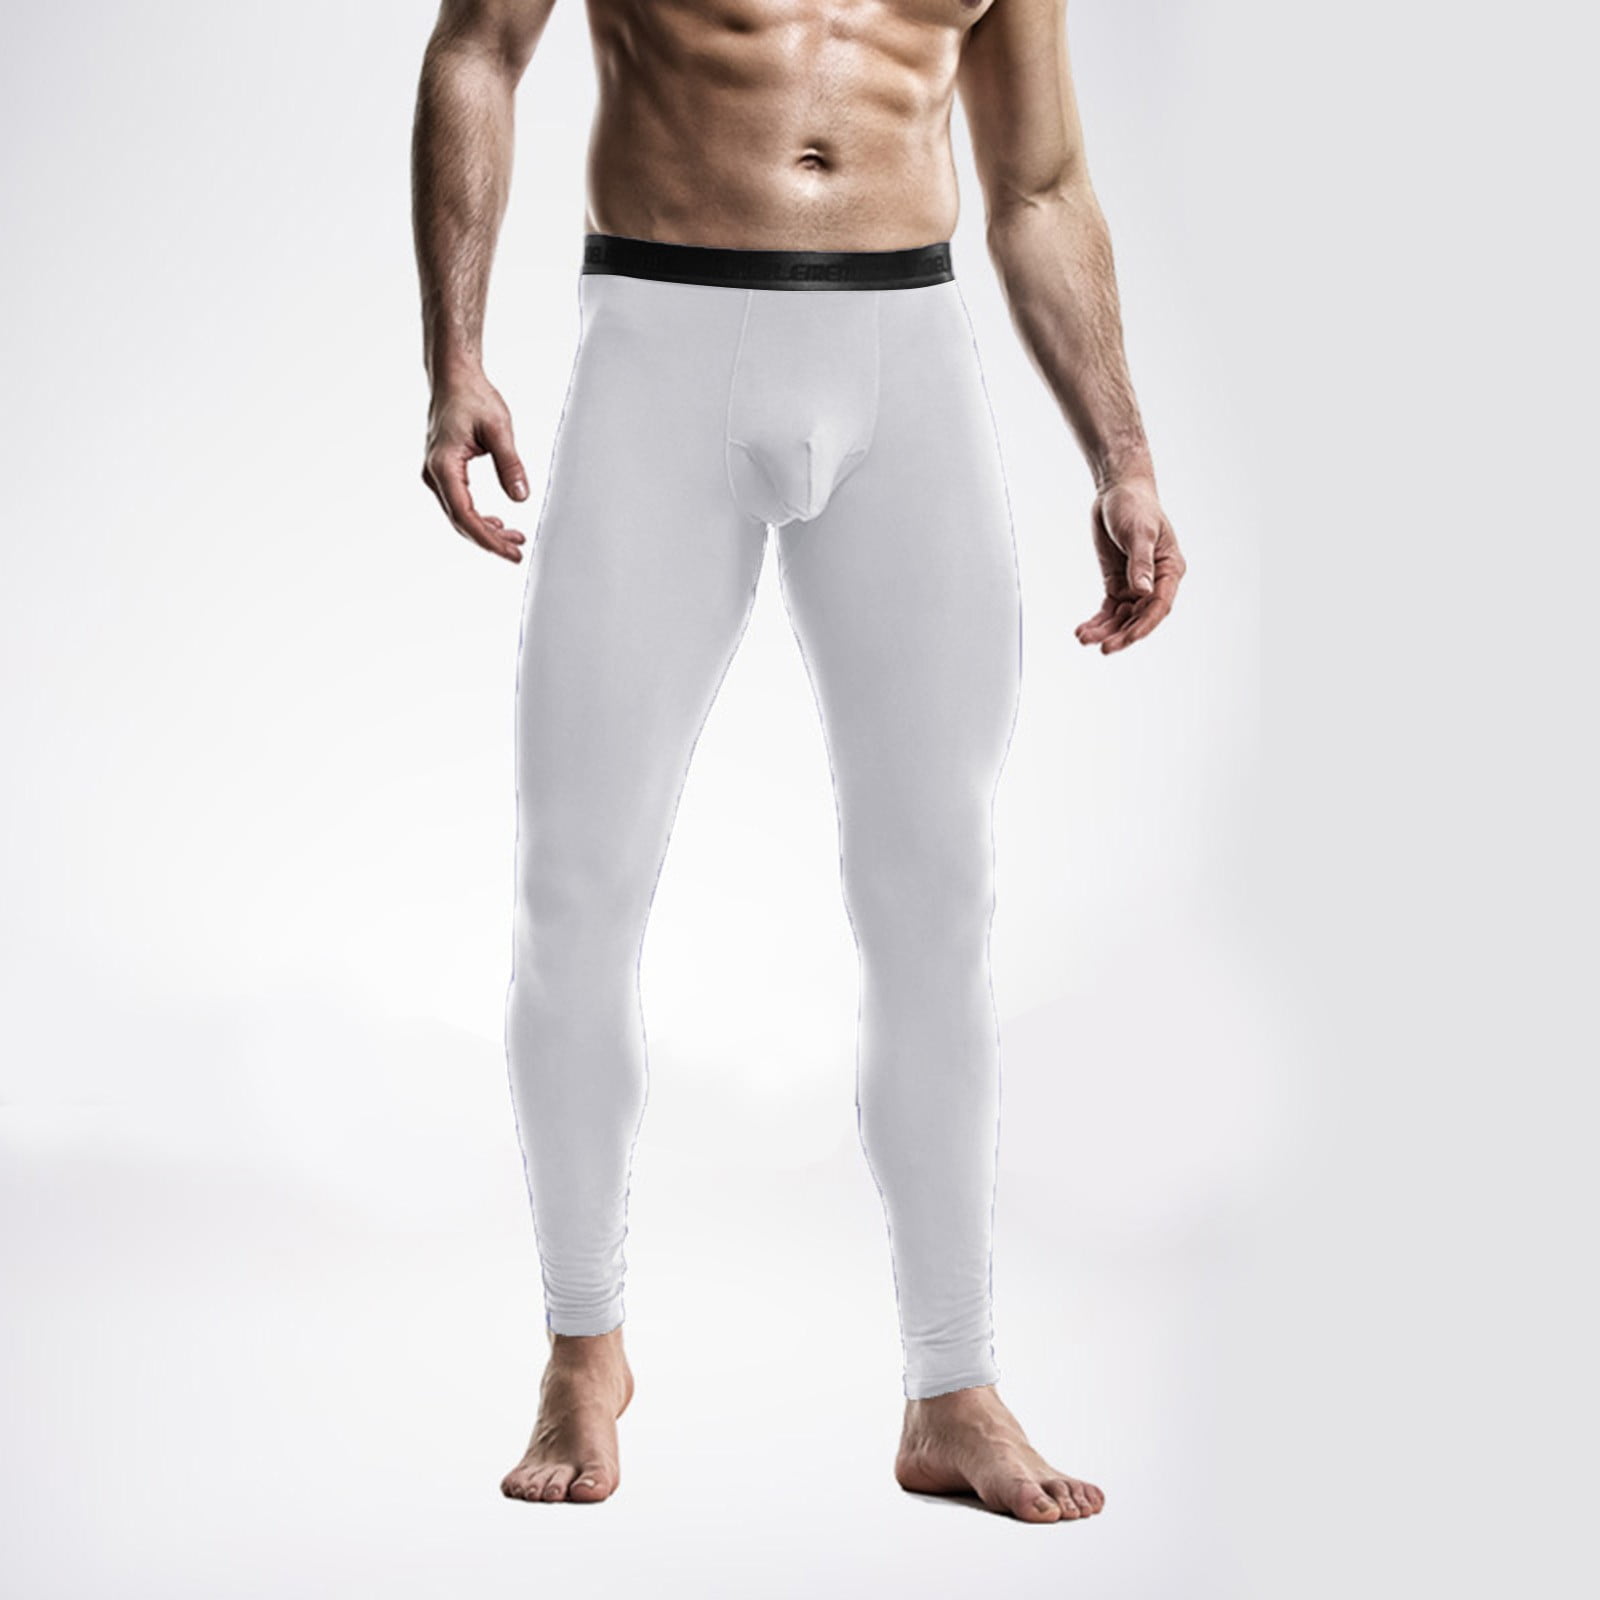 haxmnou men's thermal underwear pants, heated warm thin long